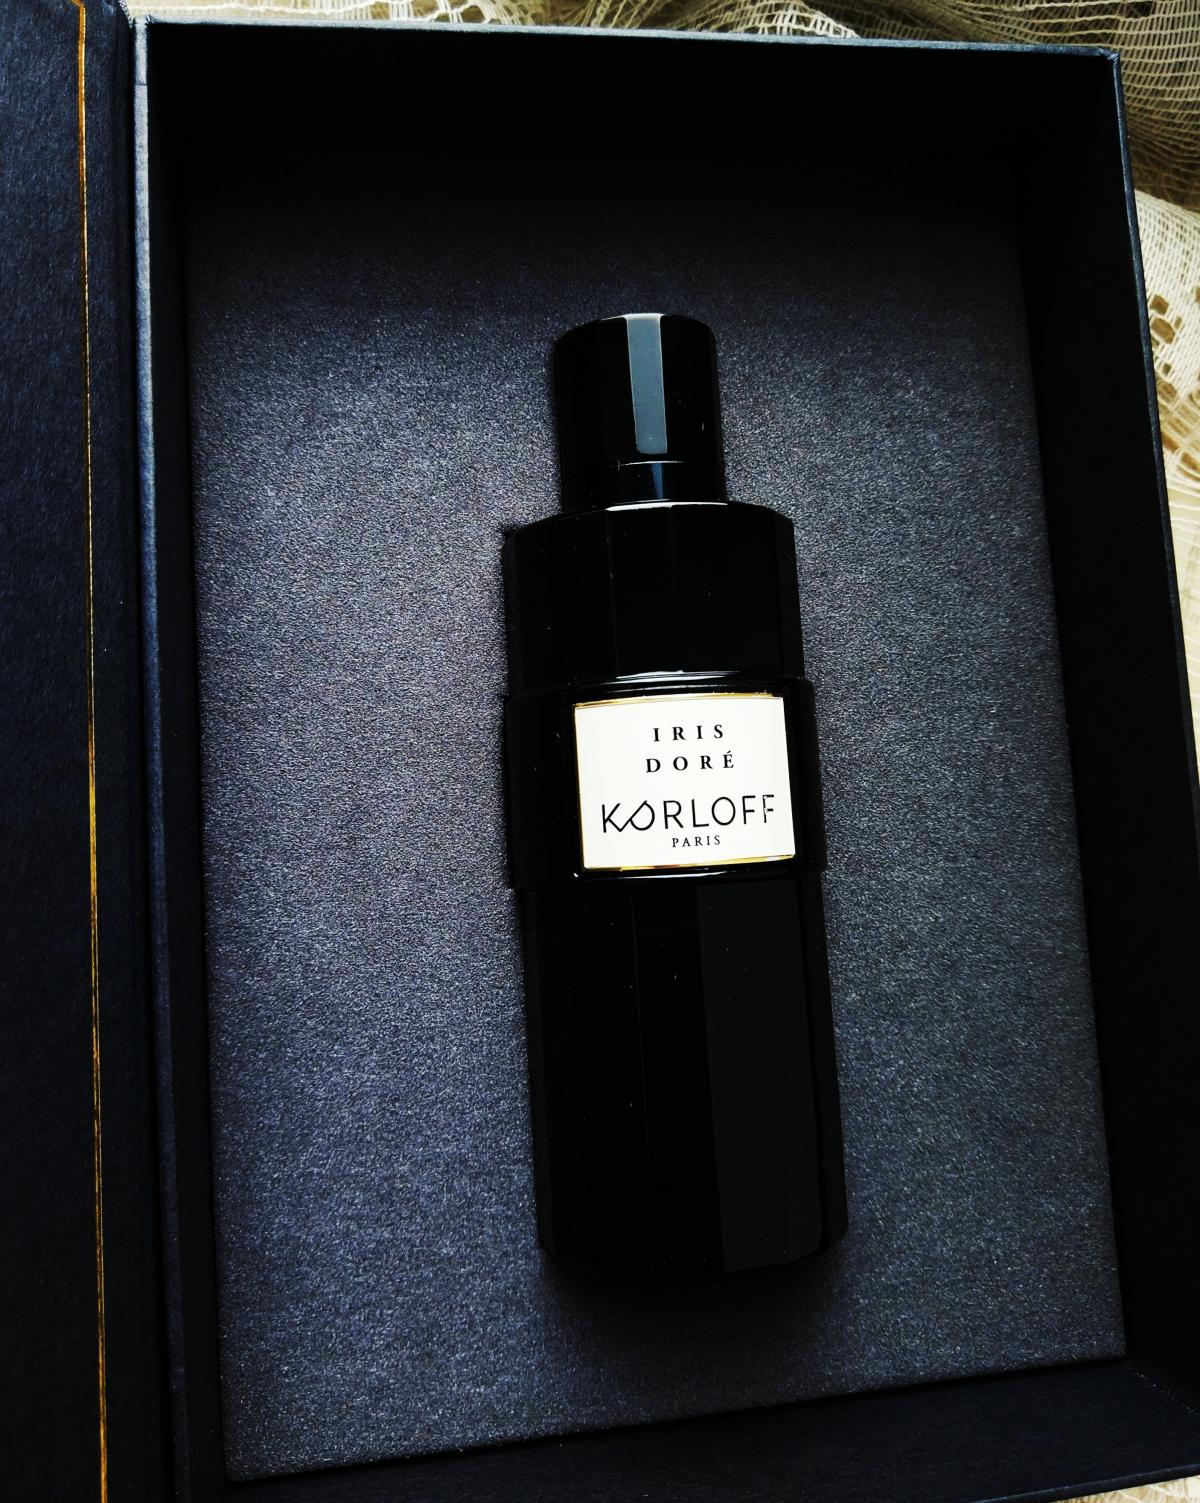 Iris Dore Korloff Paris perfume - a fragrance for women and men 2018